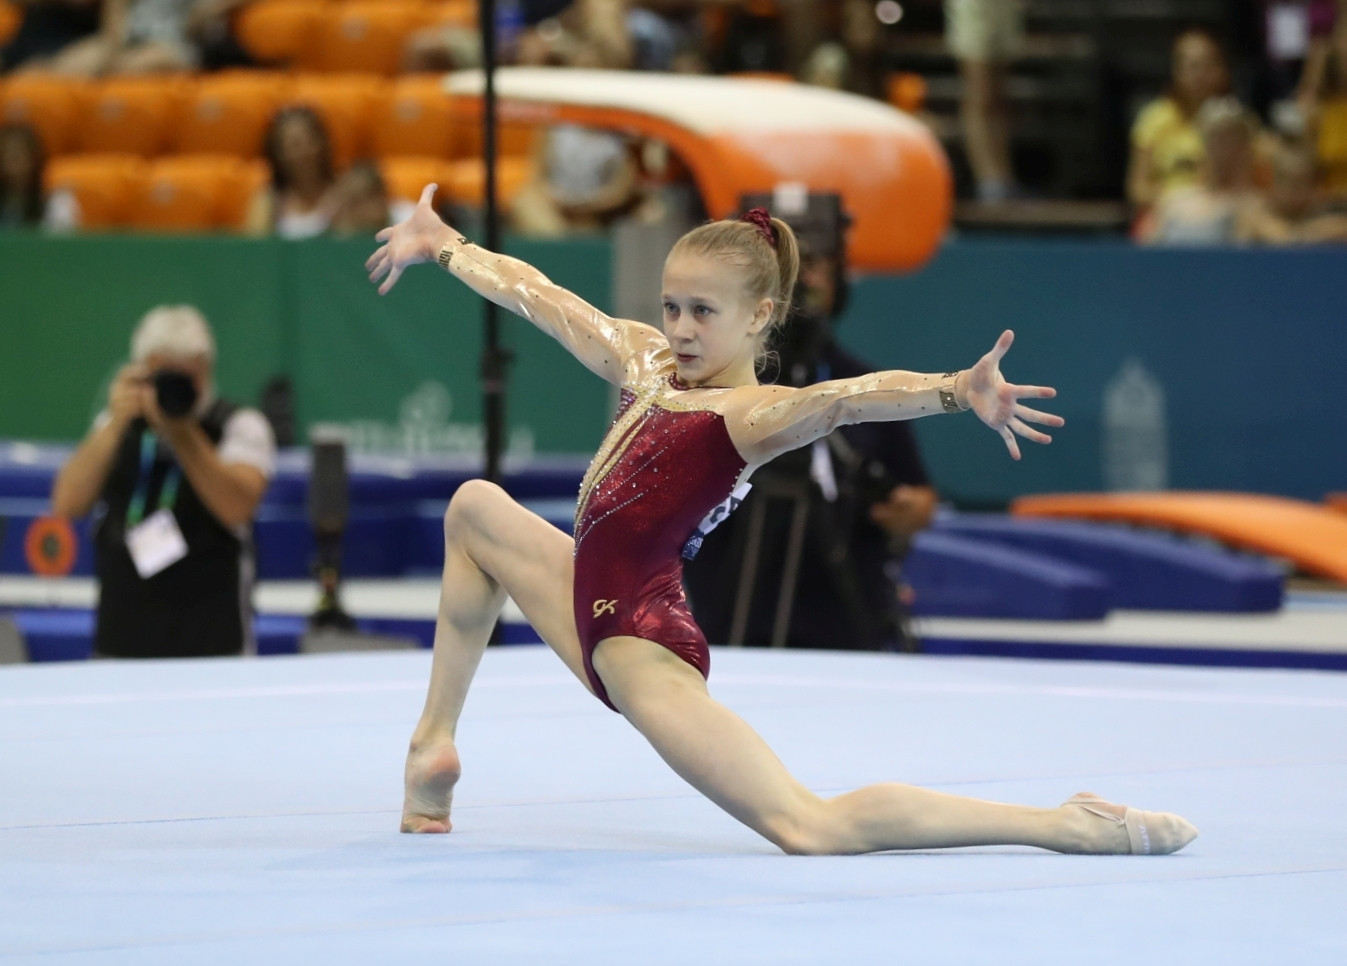 World junior champion Listunova hopeful of competing at first Olympics